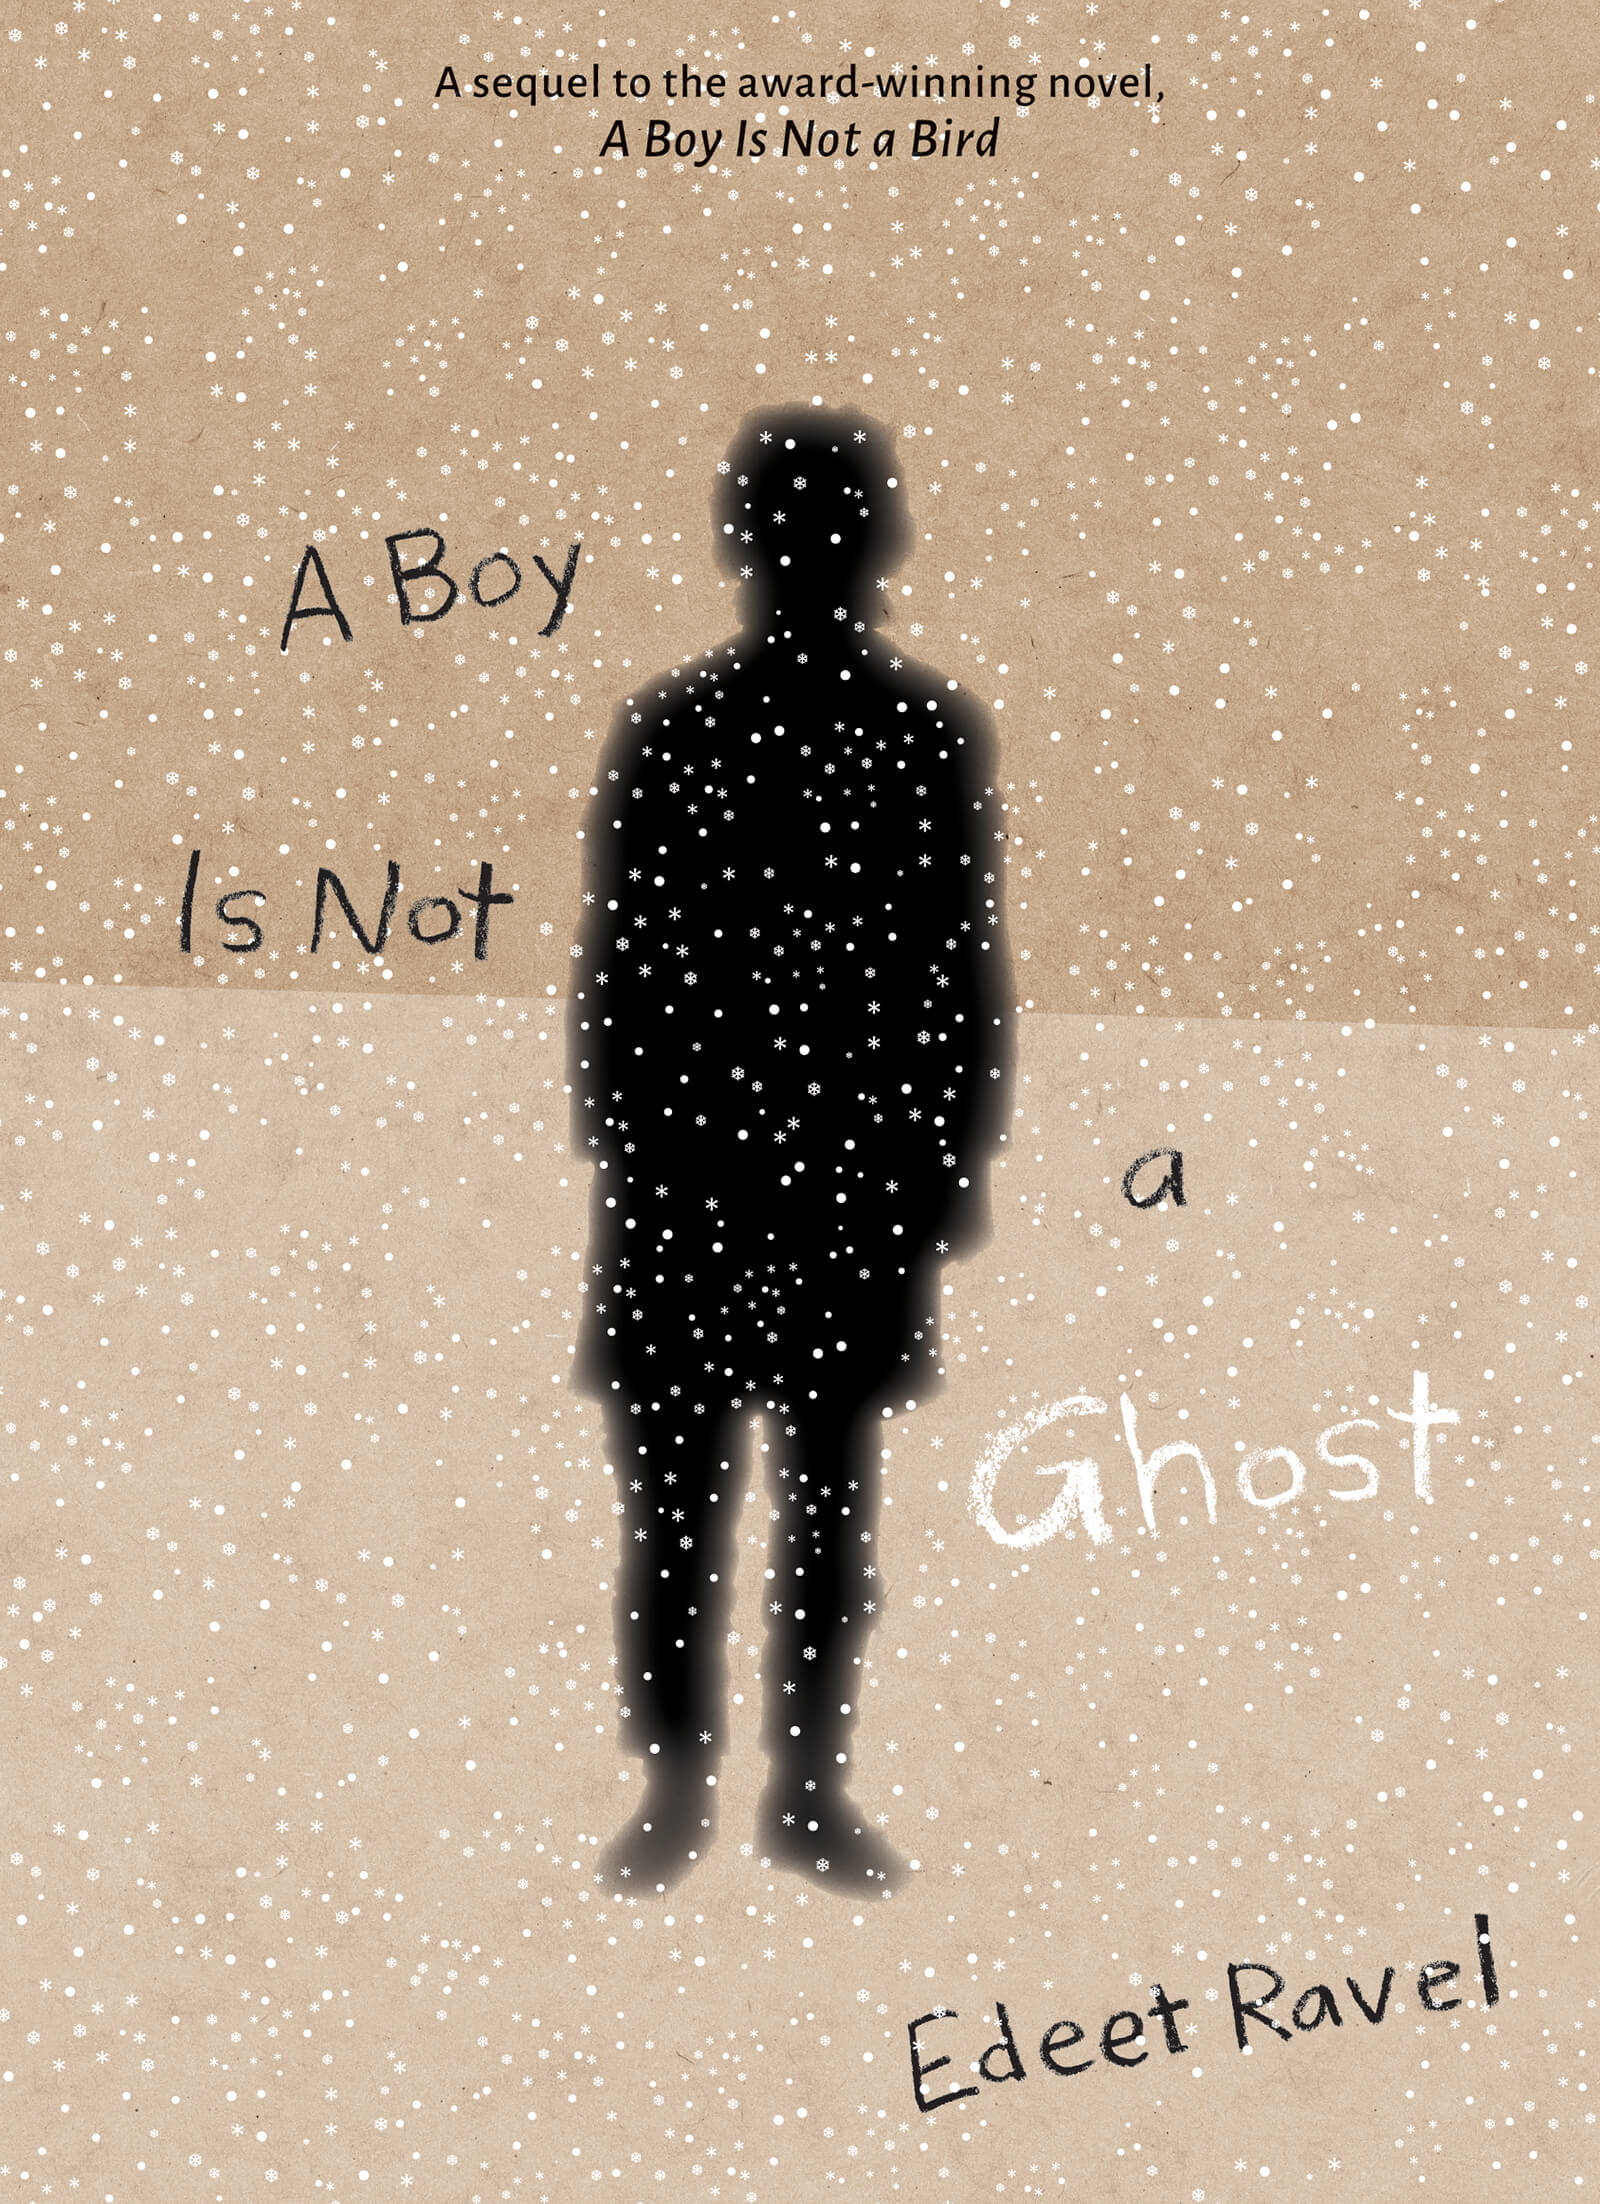 A Boy is not a ghost